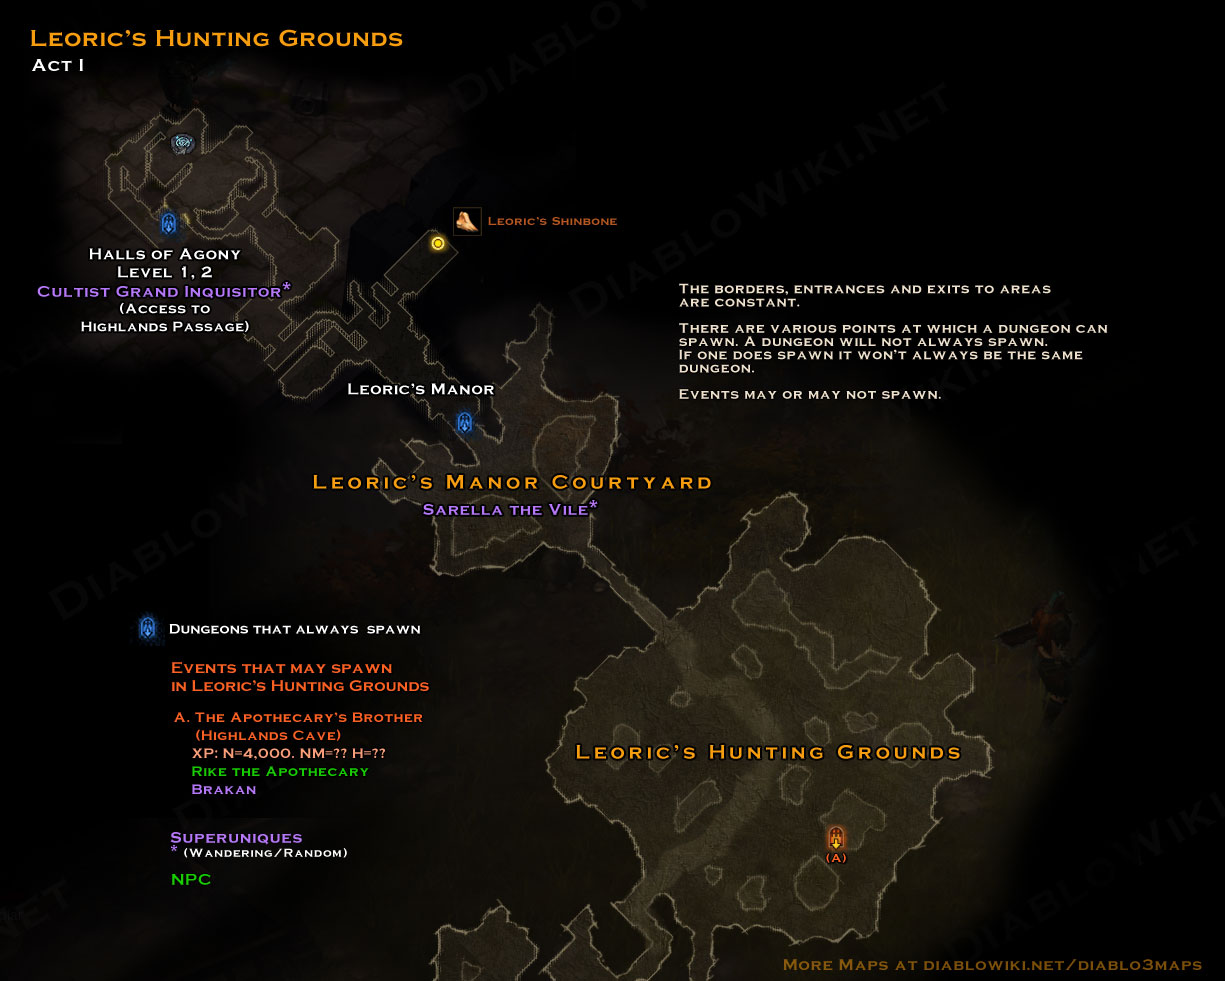 Lerocis hunting grounds map1.jpg